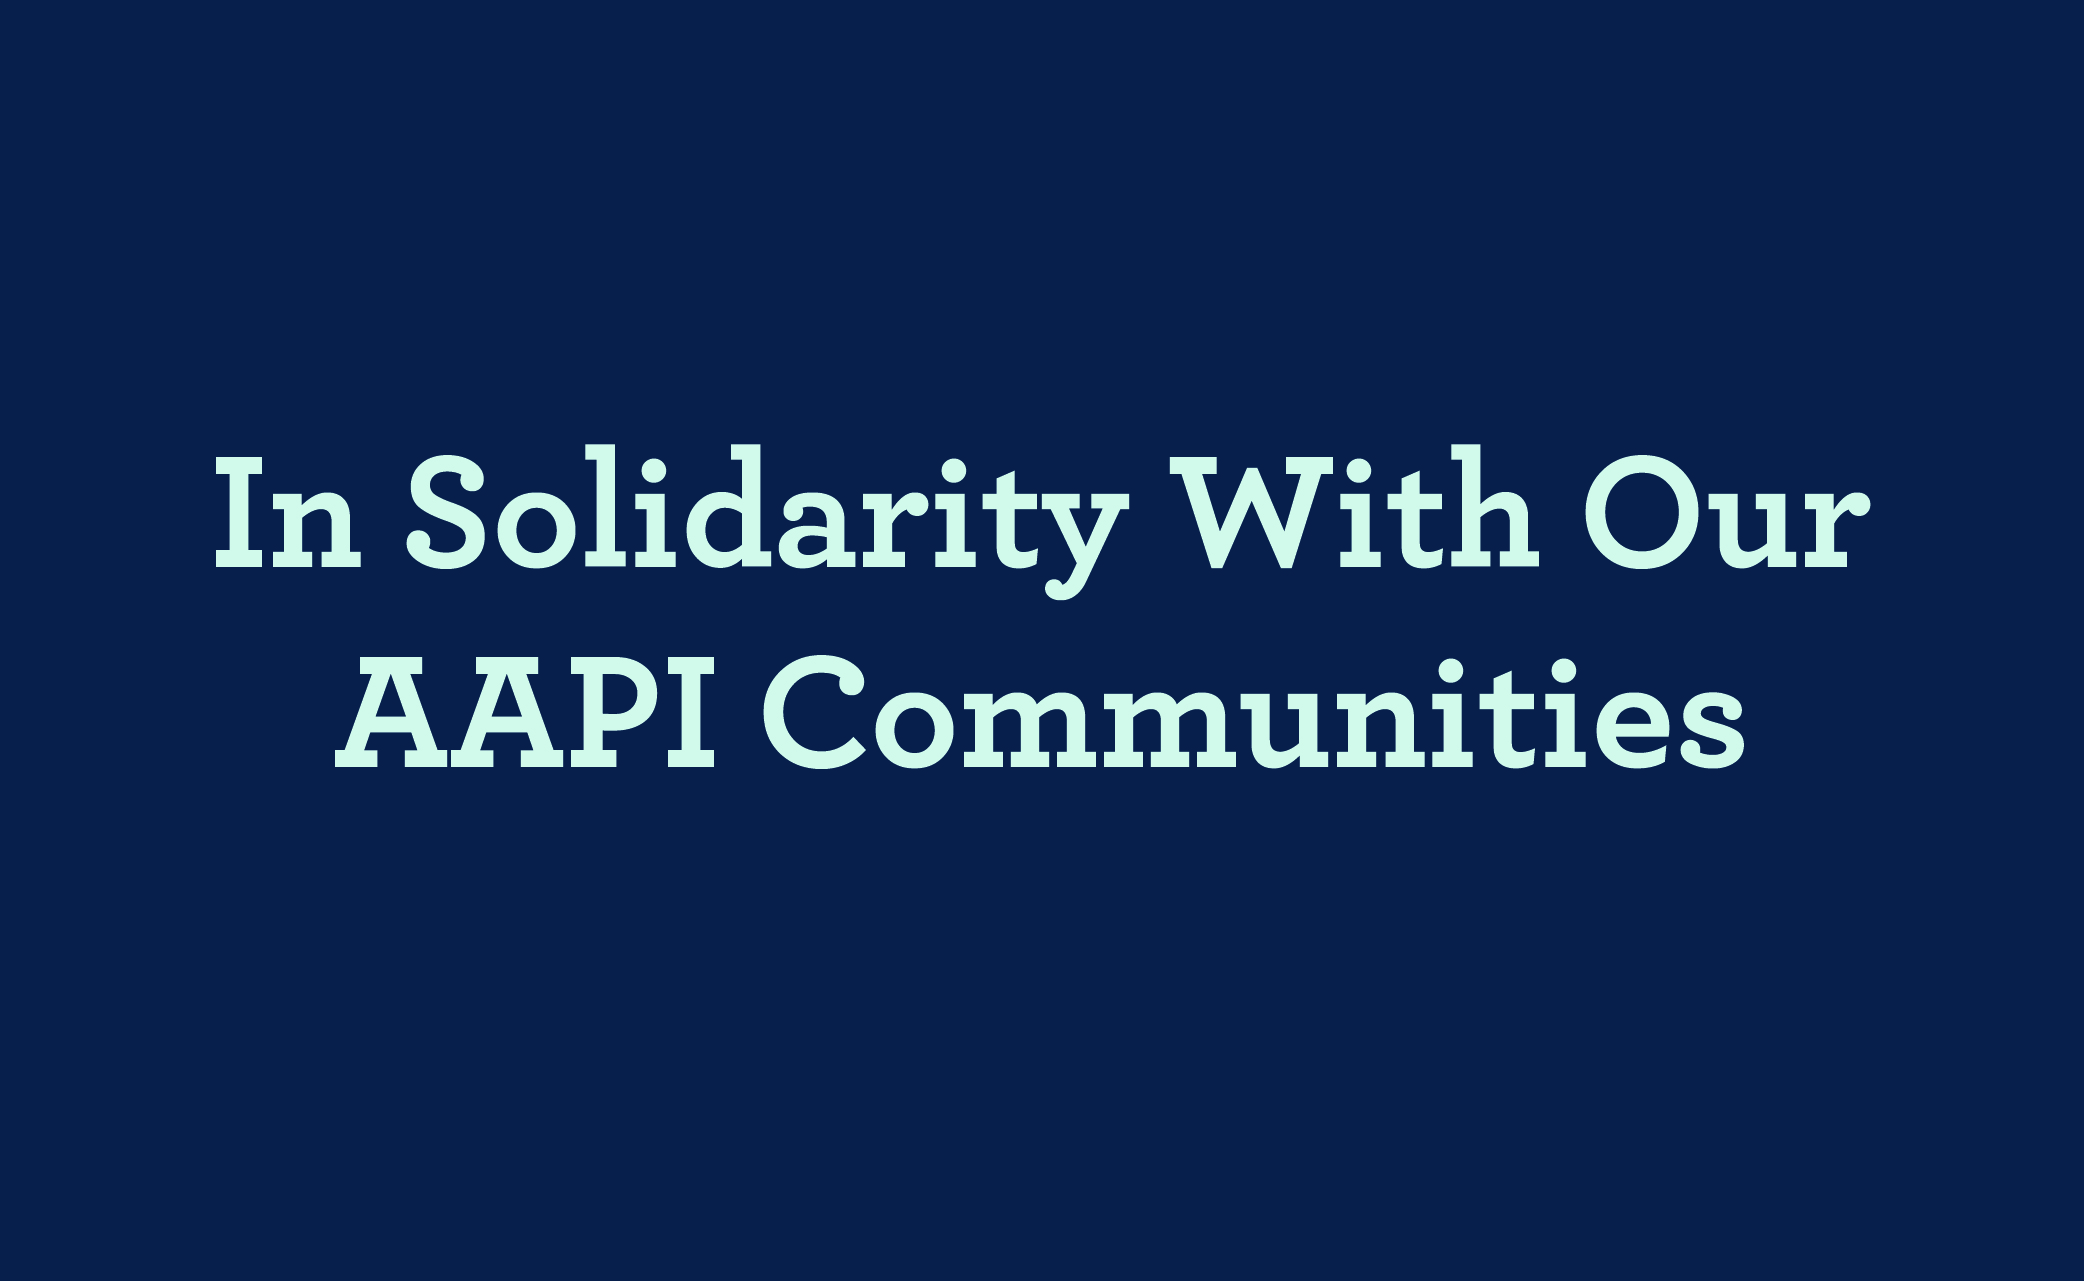 In solidarity with aapi communities